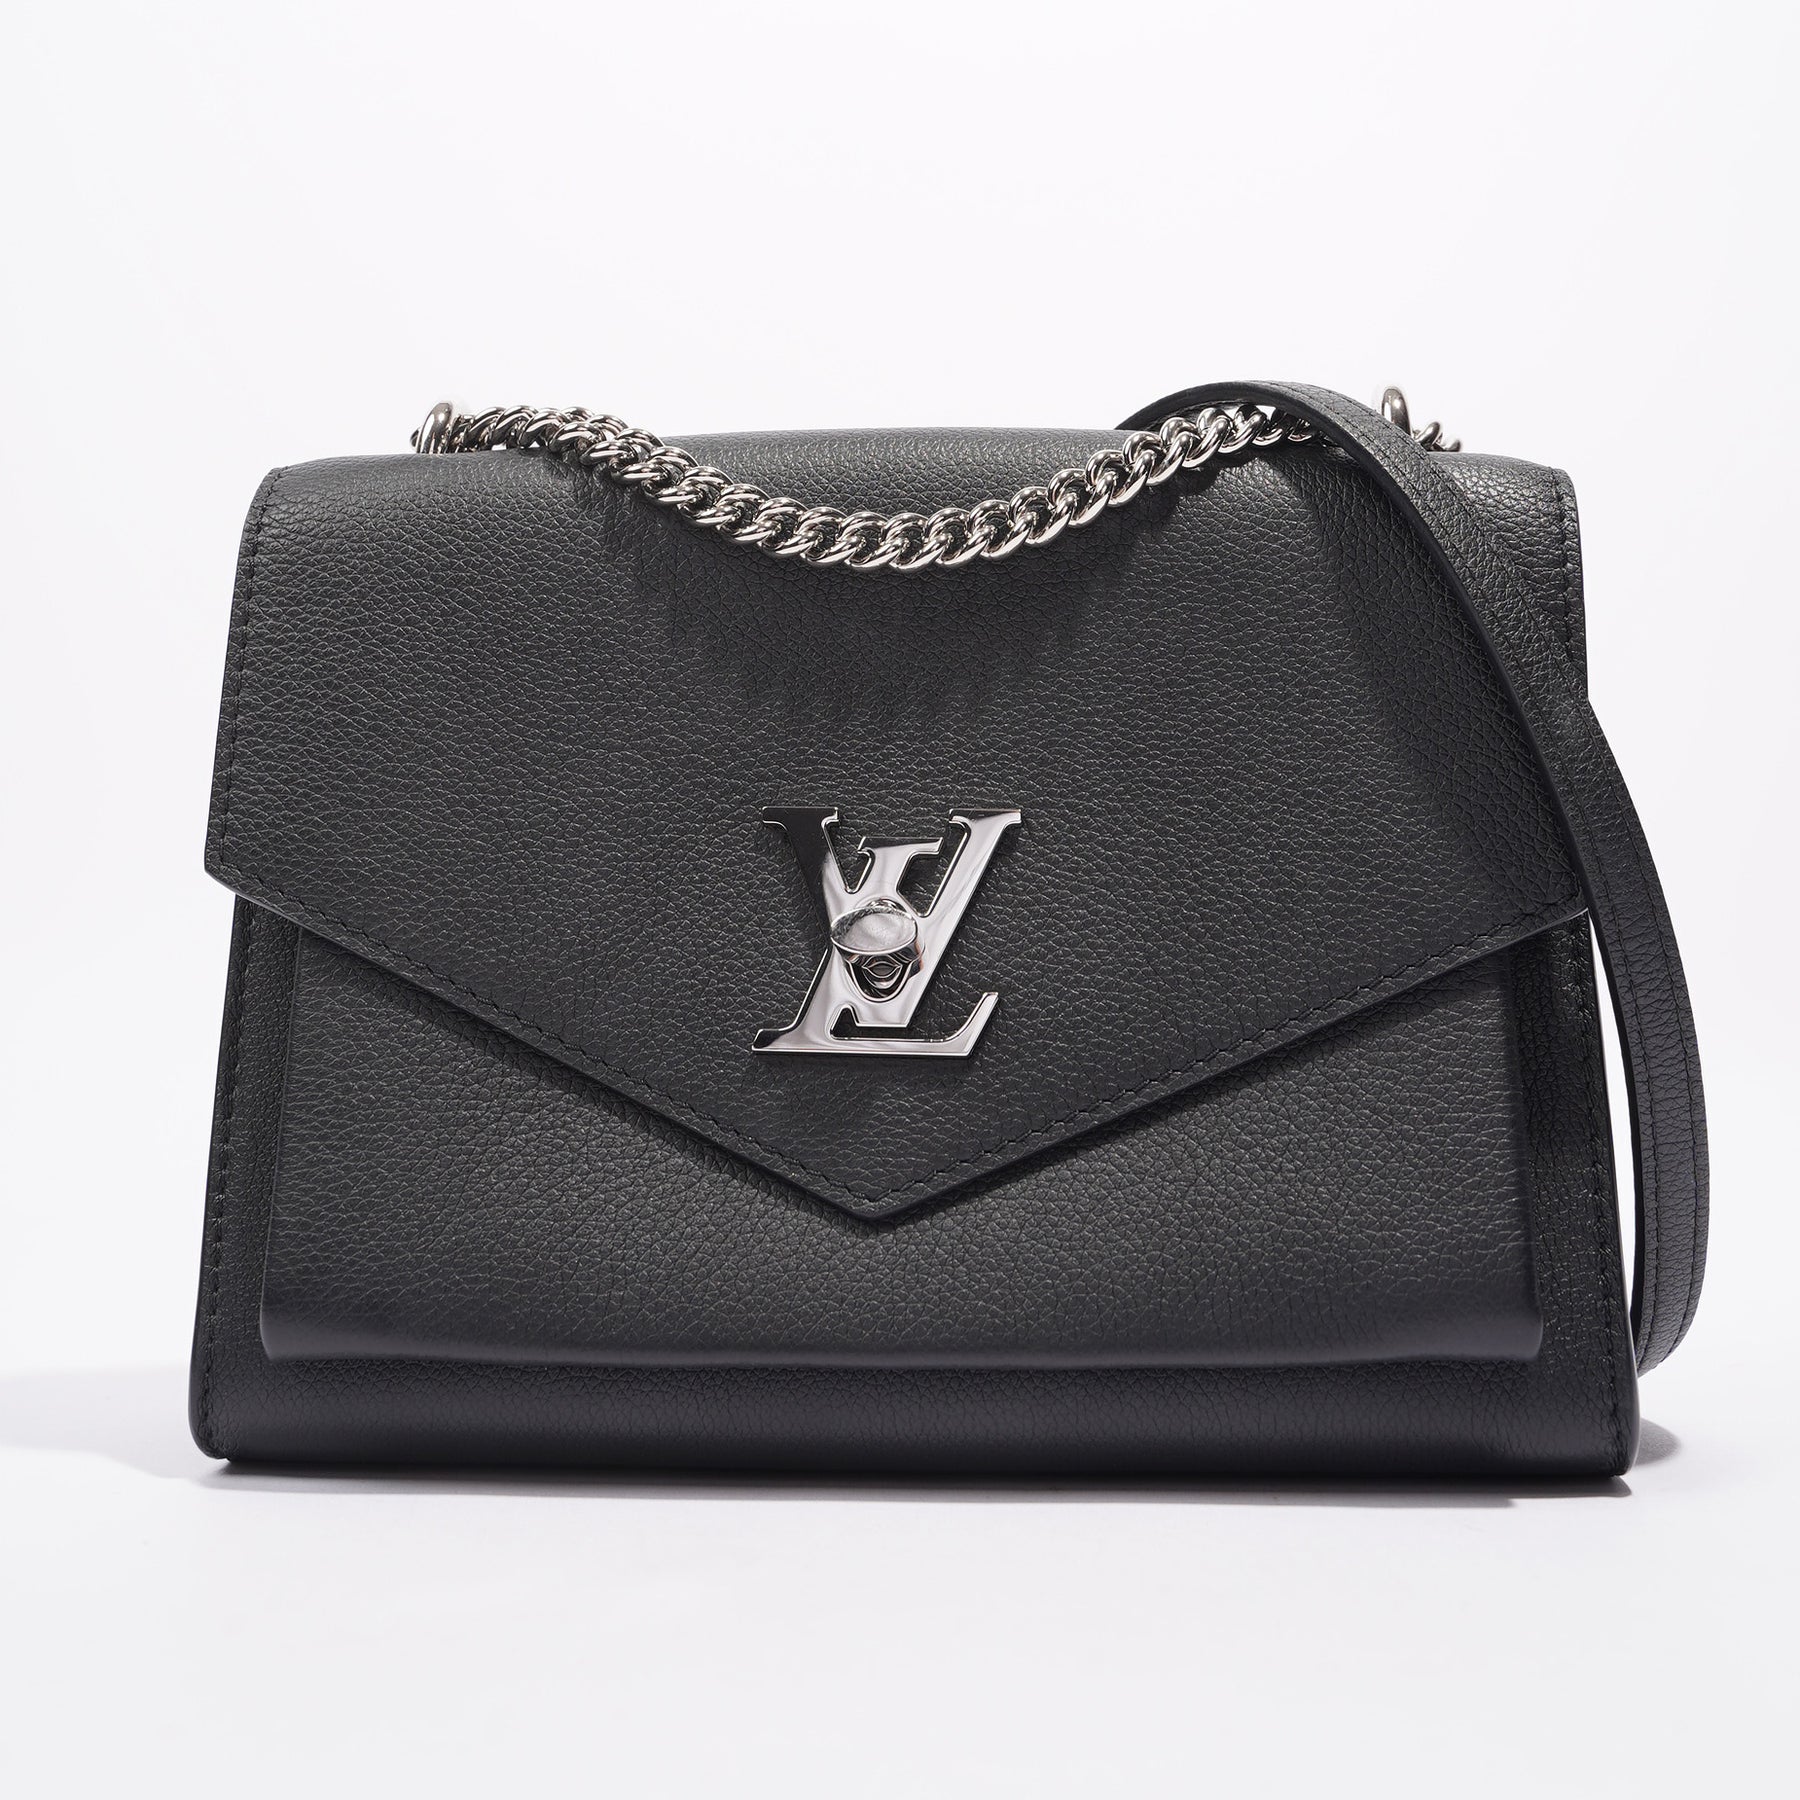 Louis Vuitton Lockme Mylockme Satchel Chain Bag